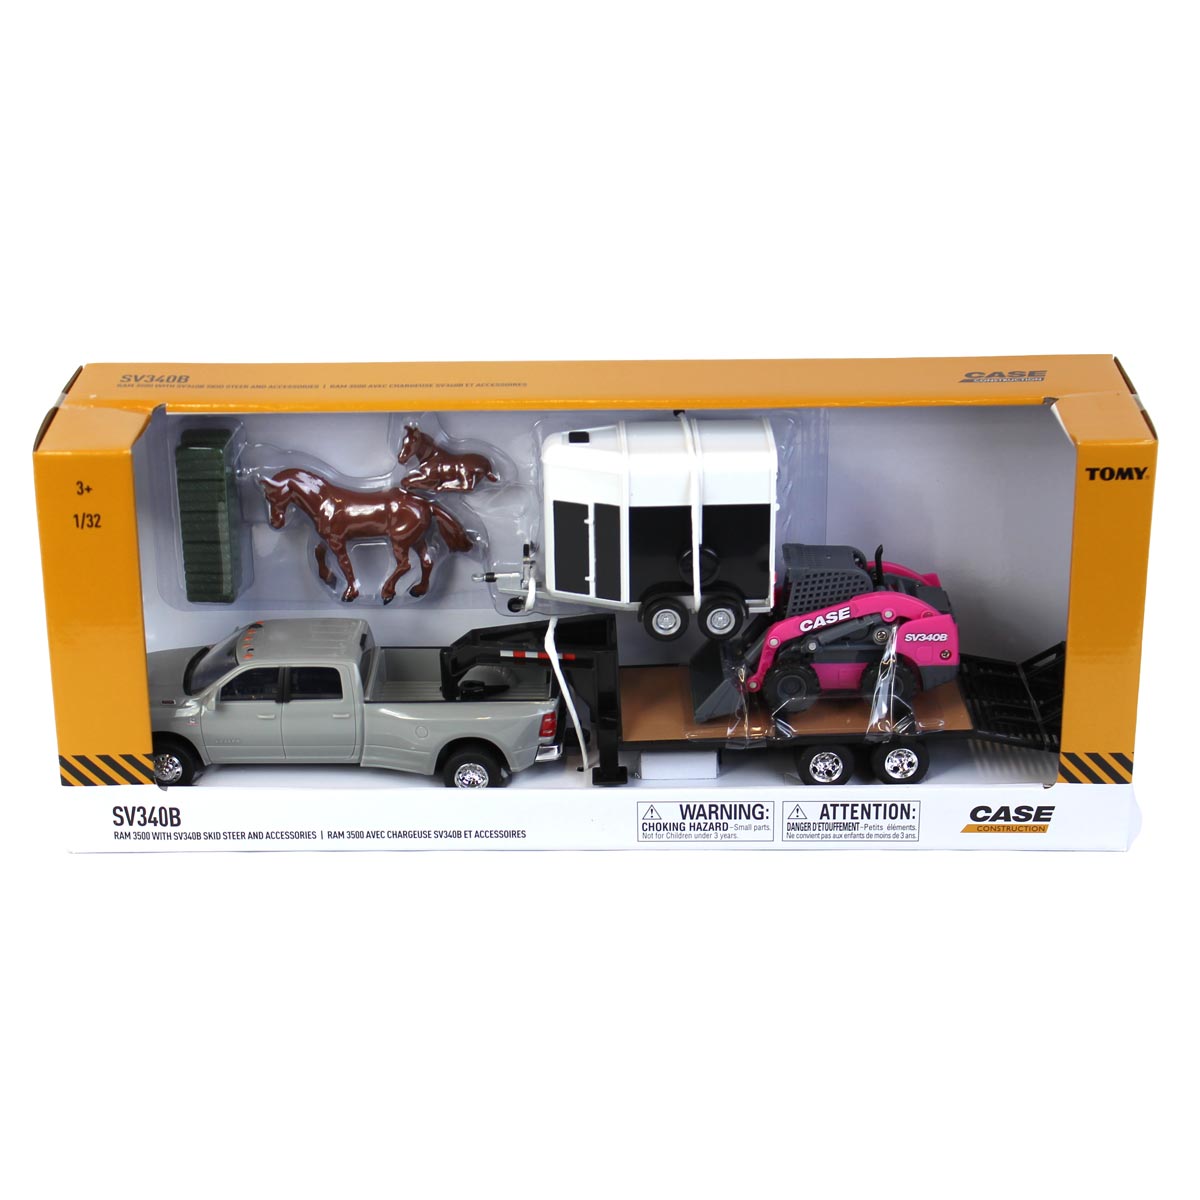 Dodge RAM 3500 with Gooseneck Trailer + Case SV340B Skid Steer + Horse Trailer + Accessoires